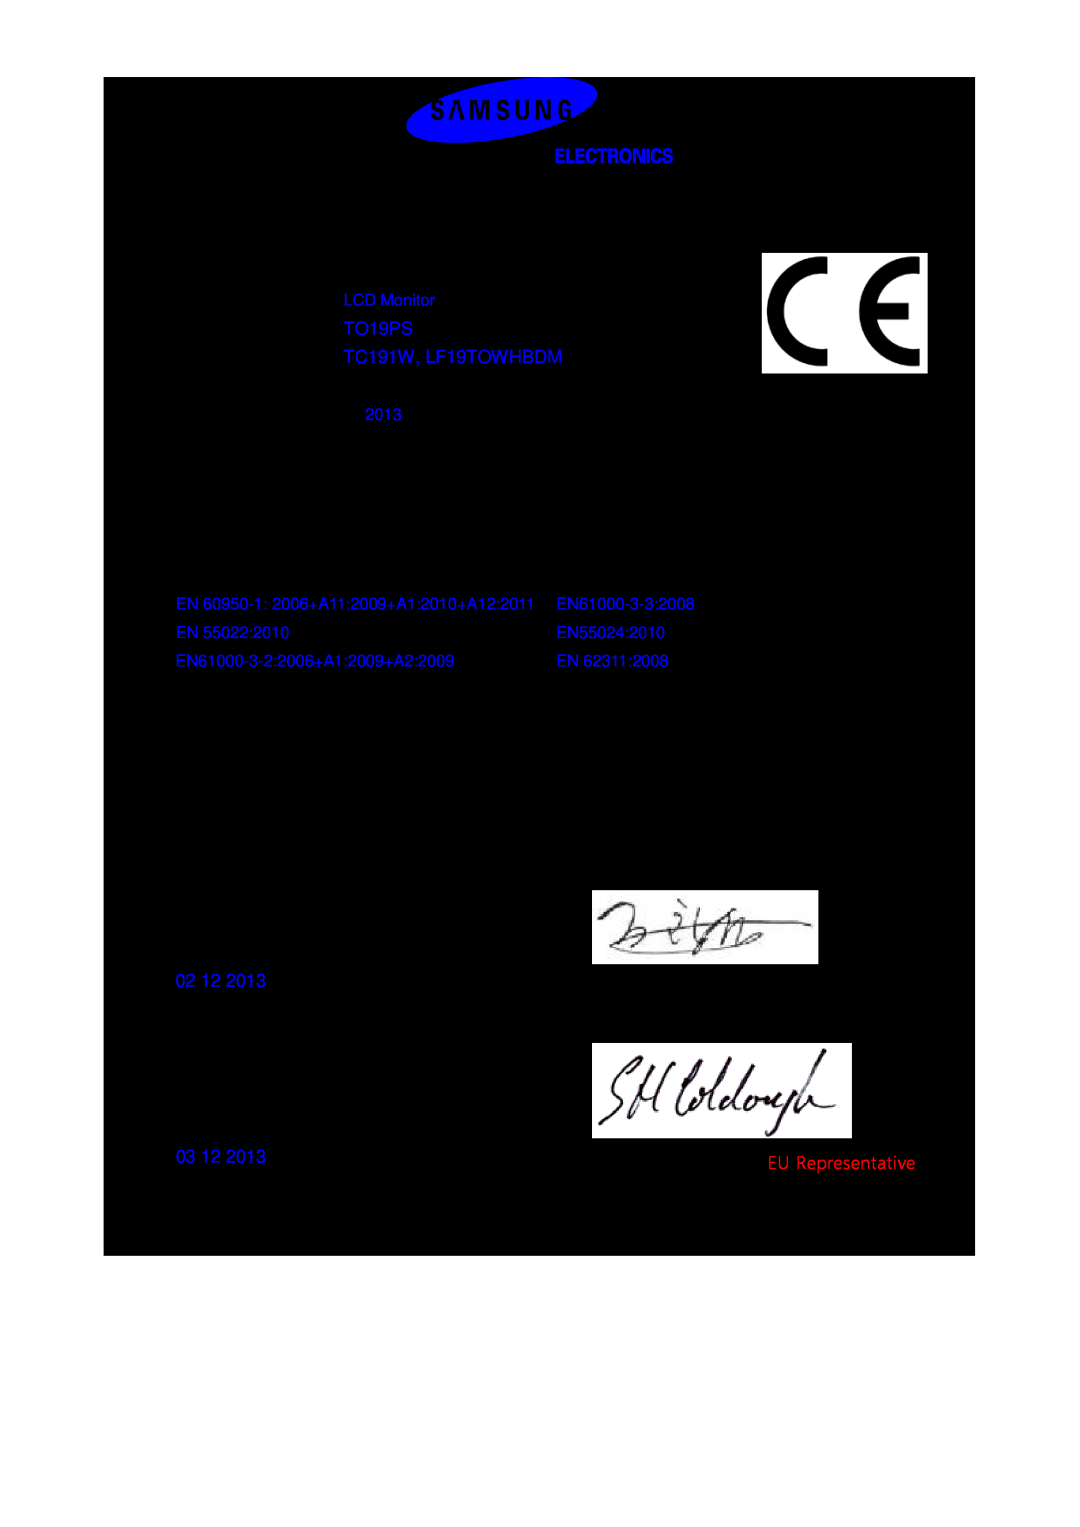 Samsung LF19TOWHBFM/EN, LF19TOWHBDM/EN manual Declaration of Conformity, TO19PS, TC191W, LF19TOWHBDM, 02 12, 03 12 